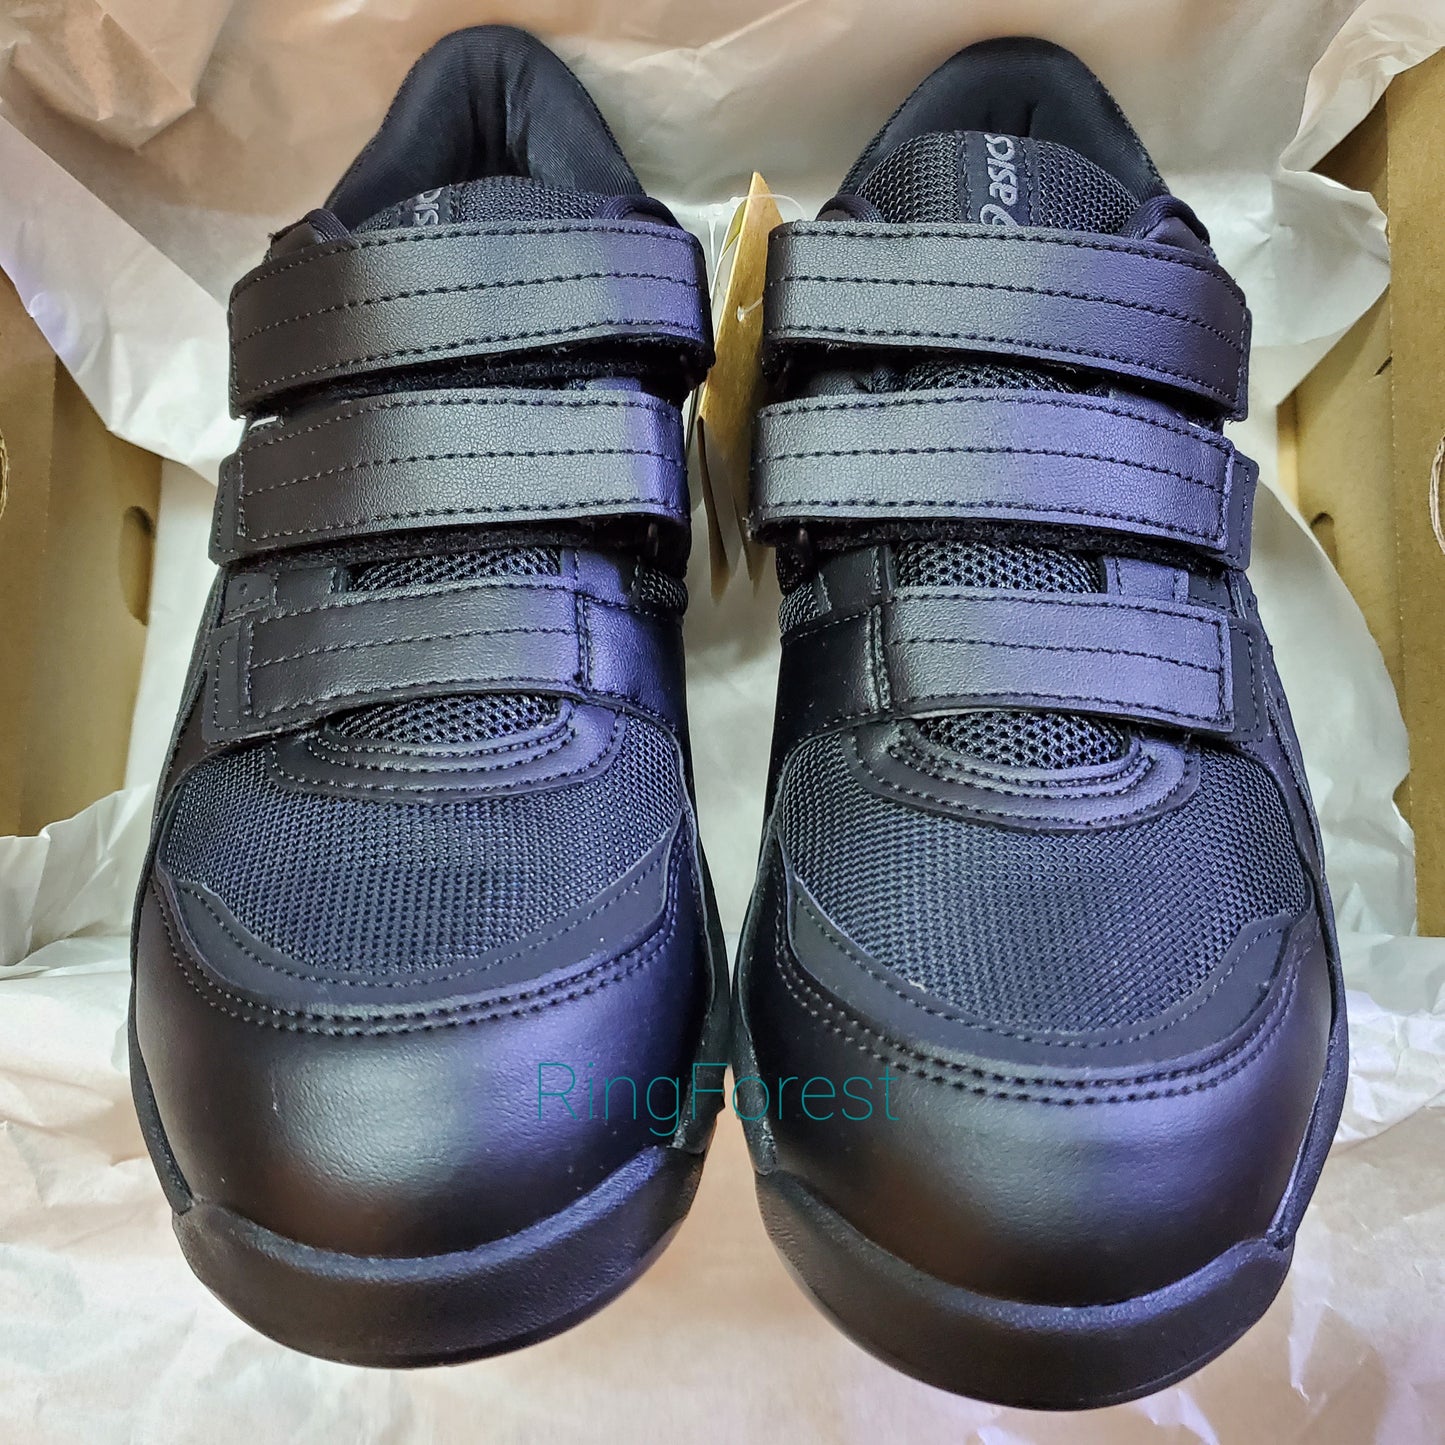 🎌Japan🎌 [Ready stock▪️Ready to ship] Asics black Velcro safety shoes EU41.5 25.5cm US8 CP205